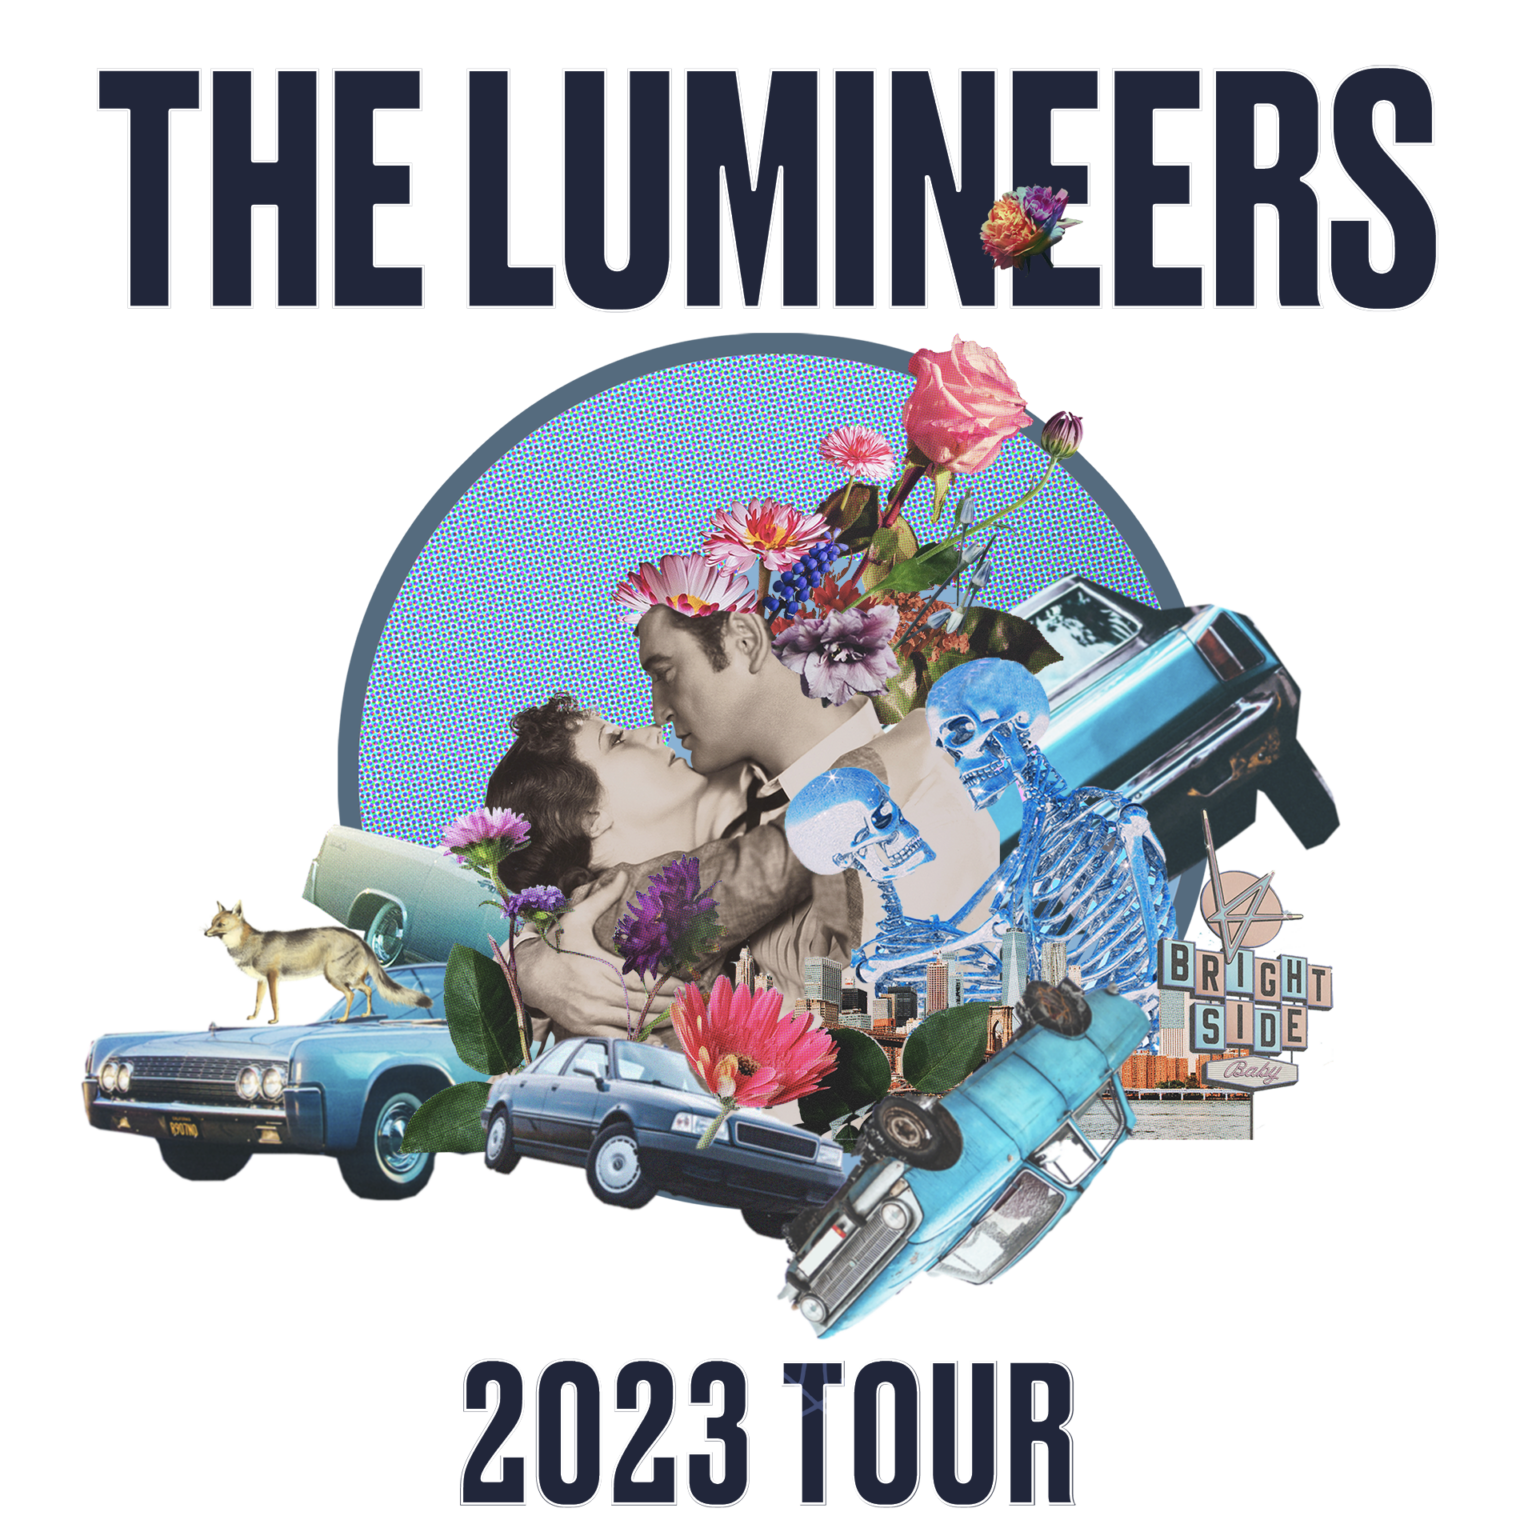 lumineers tour 2023 europe